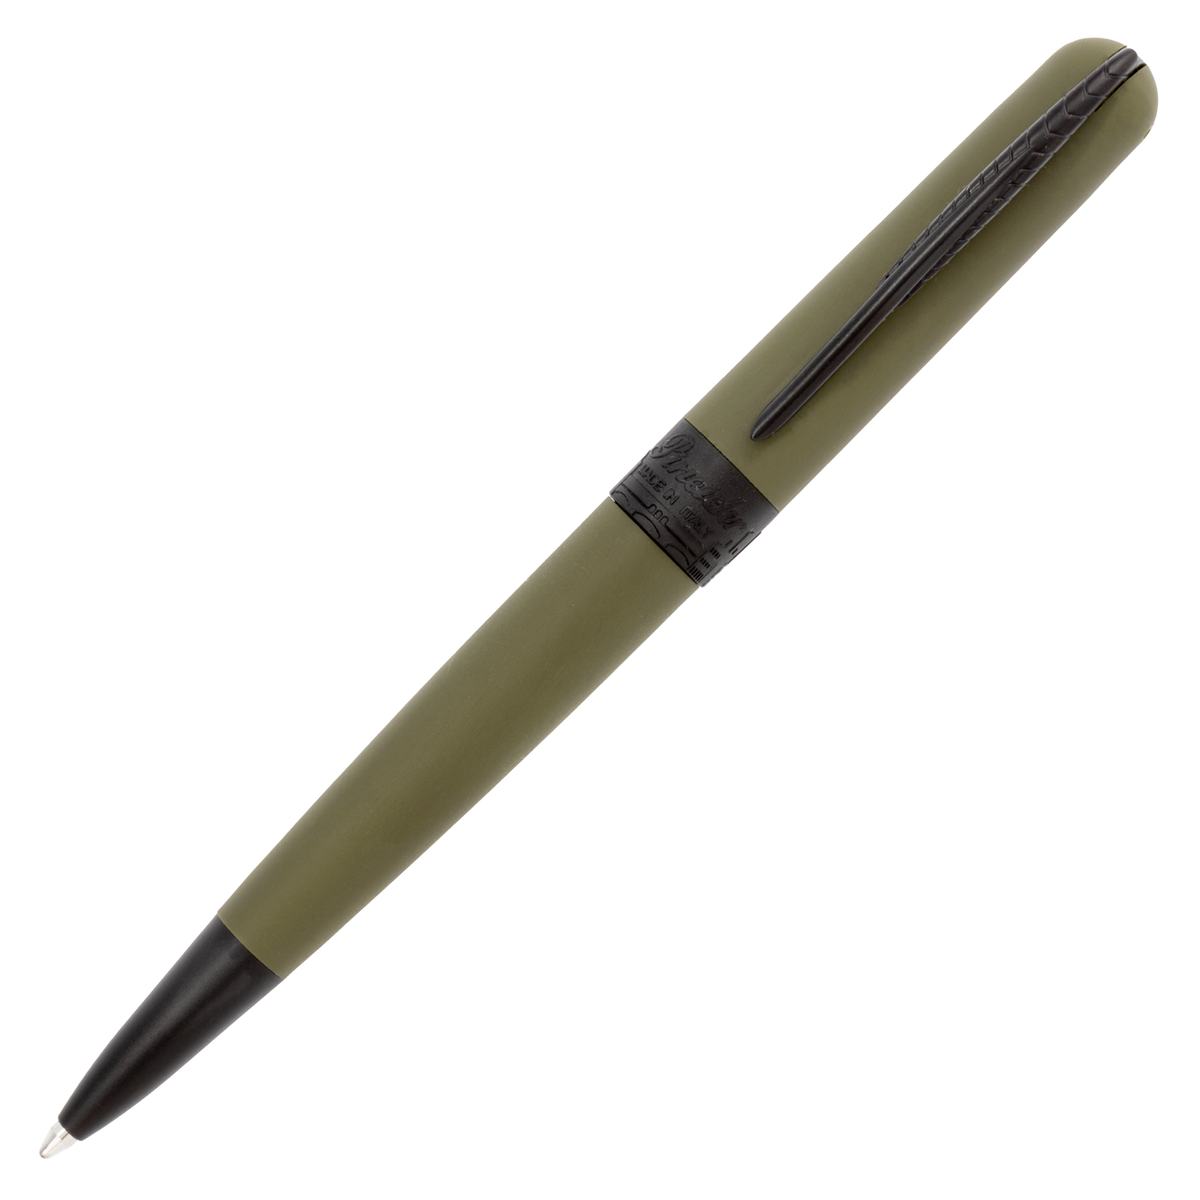 HUGO BOSS: GEAR fountain pen in Black/Silver. Available in foutain pen,  roller pen and ballpoint